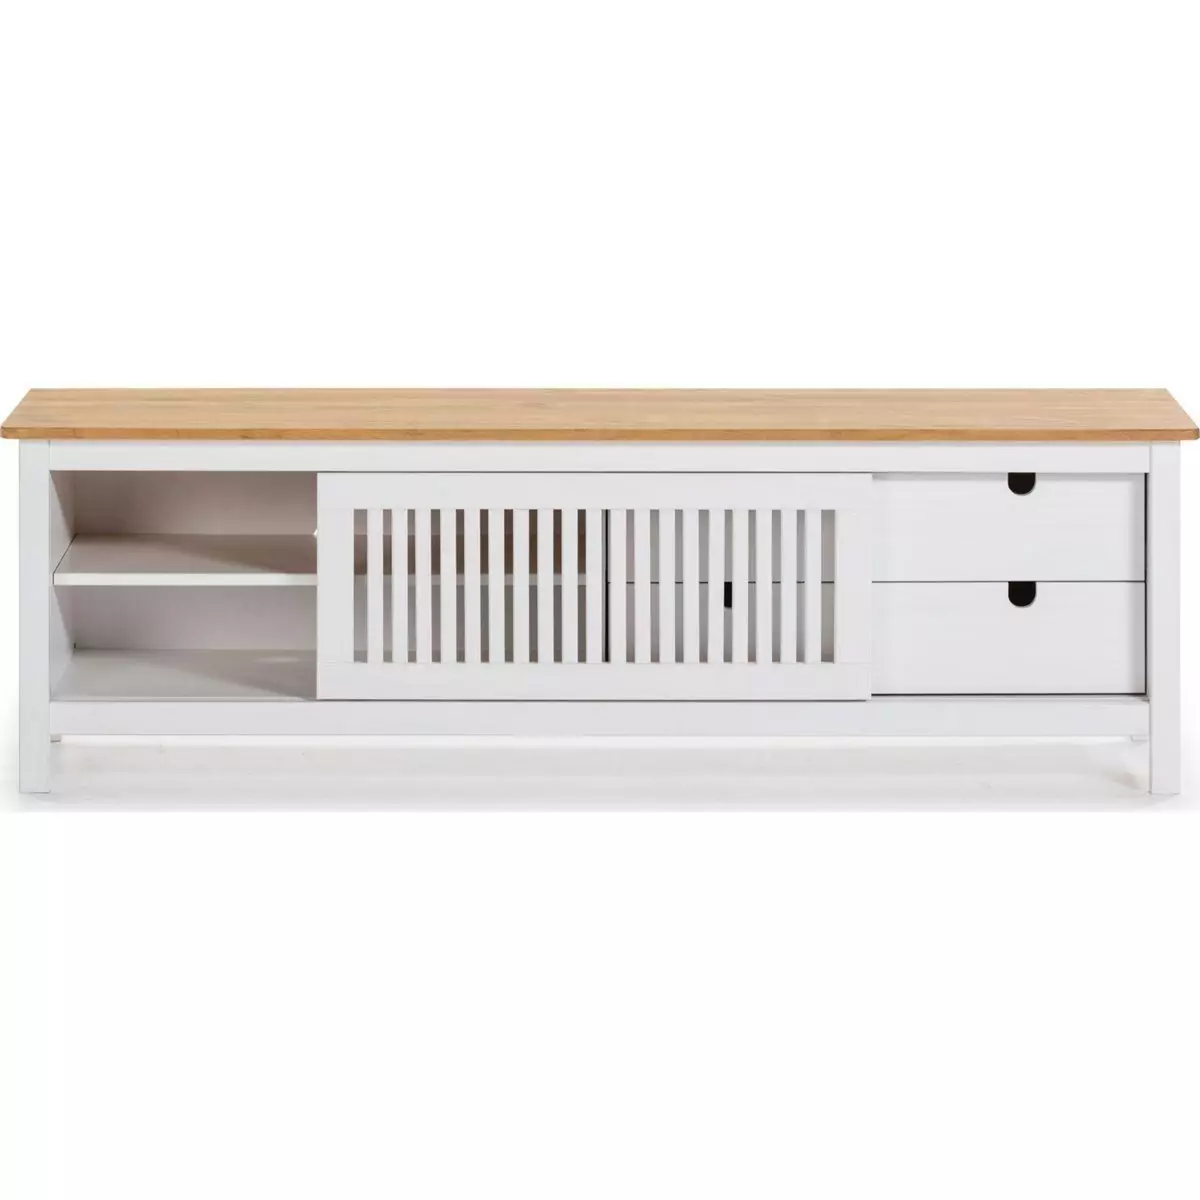 HOMIFAB Meuble TV 1 porte coulissante 2 tiroirs en pin massif blanc / effet chêne 158 cm - Fabia